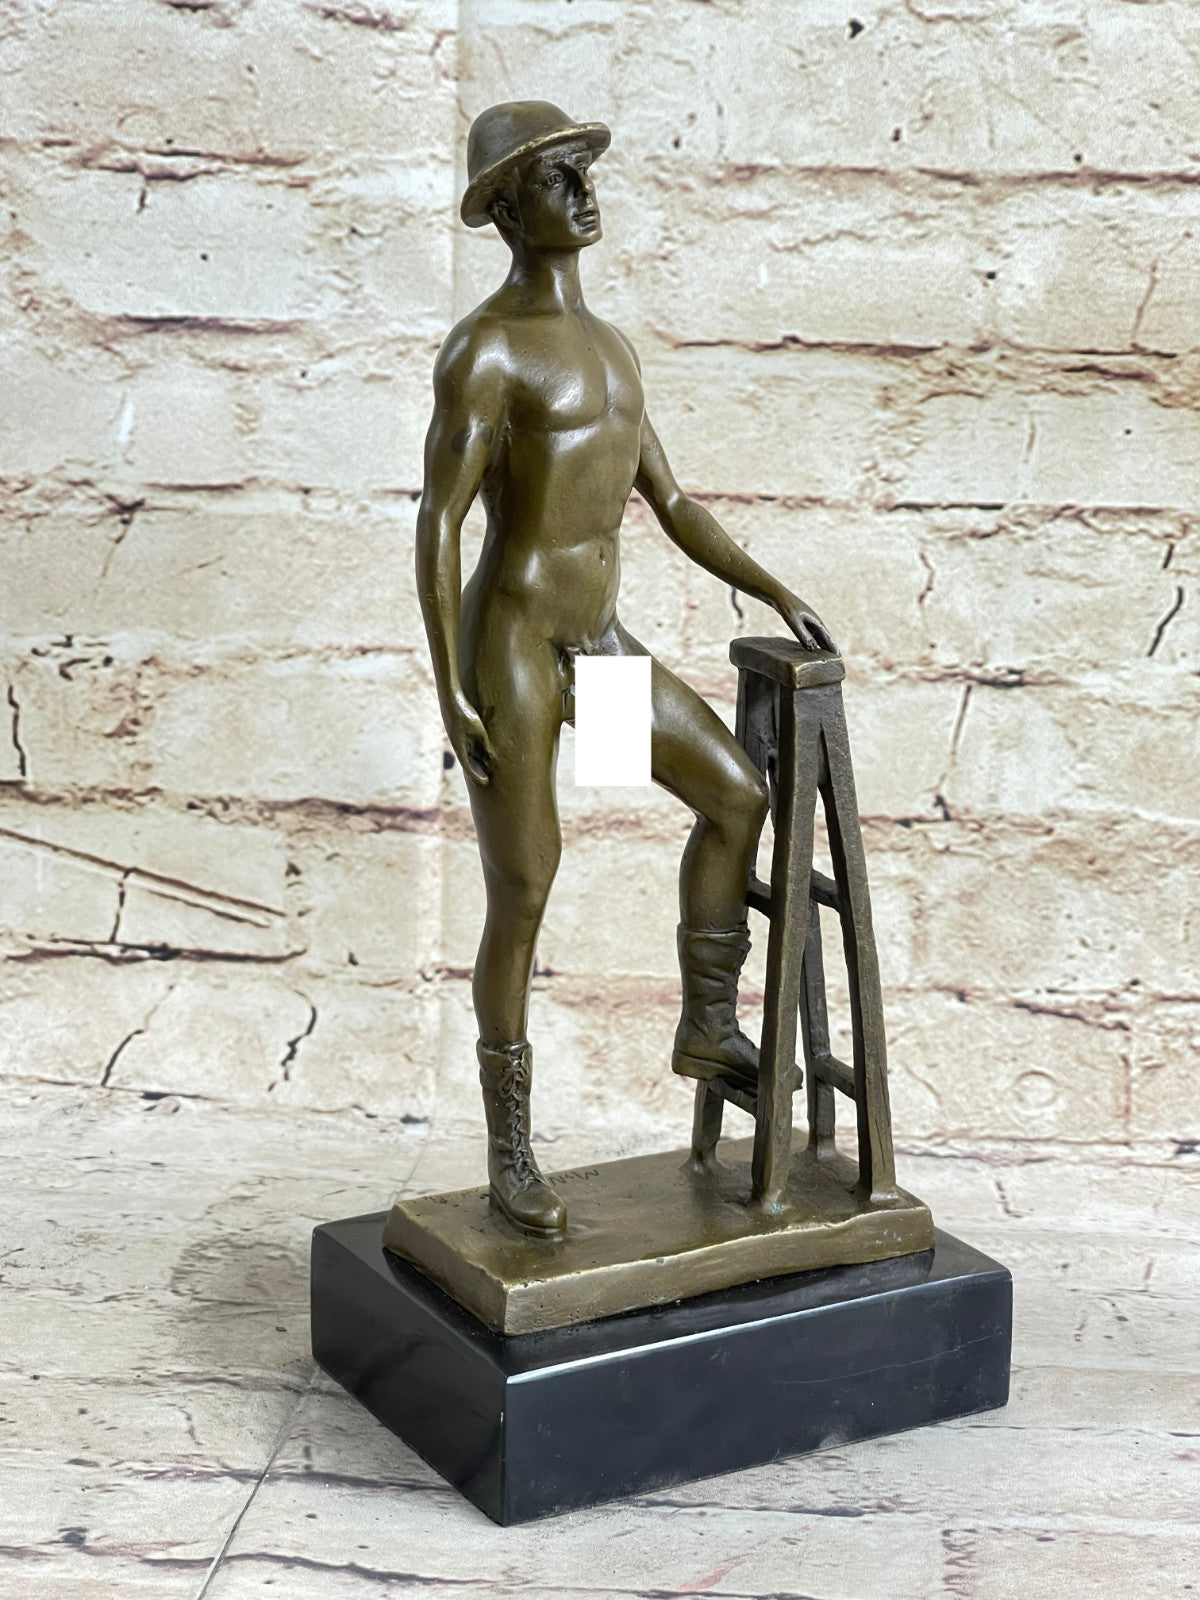 Signed Original Artwork Construction Worker Gay Solid Bronze Sculpture Nude Art